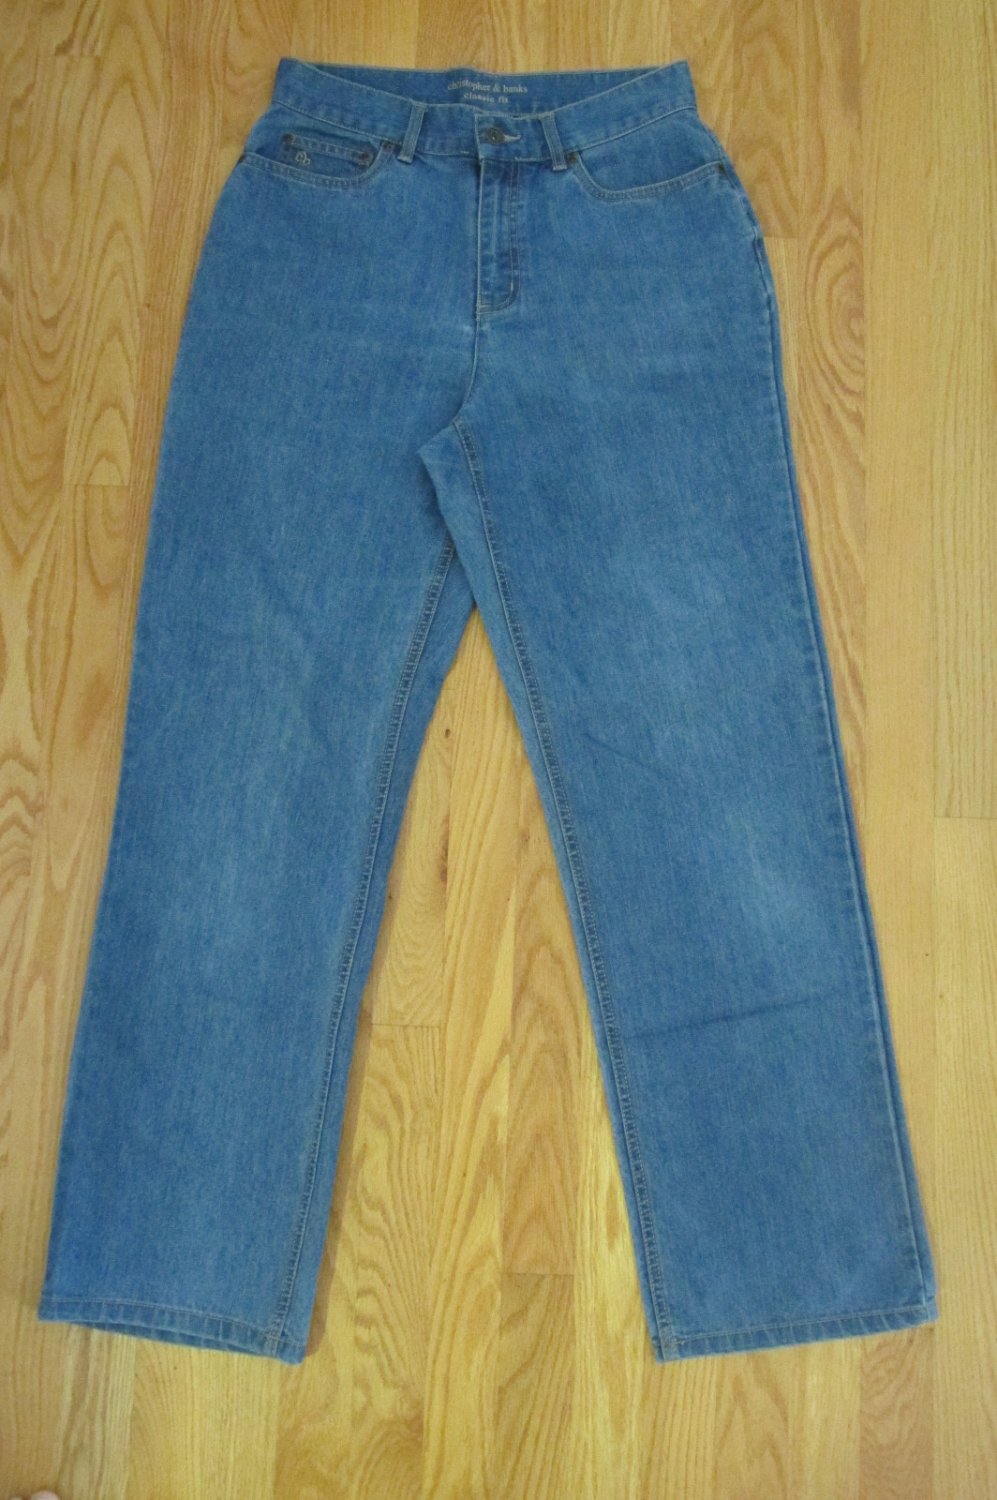 Christopher & Banks, Jeans, Blue Denim, Size 12, Stretch, High